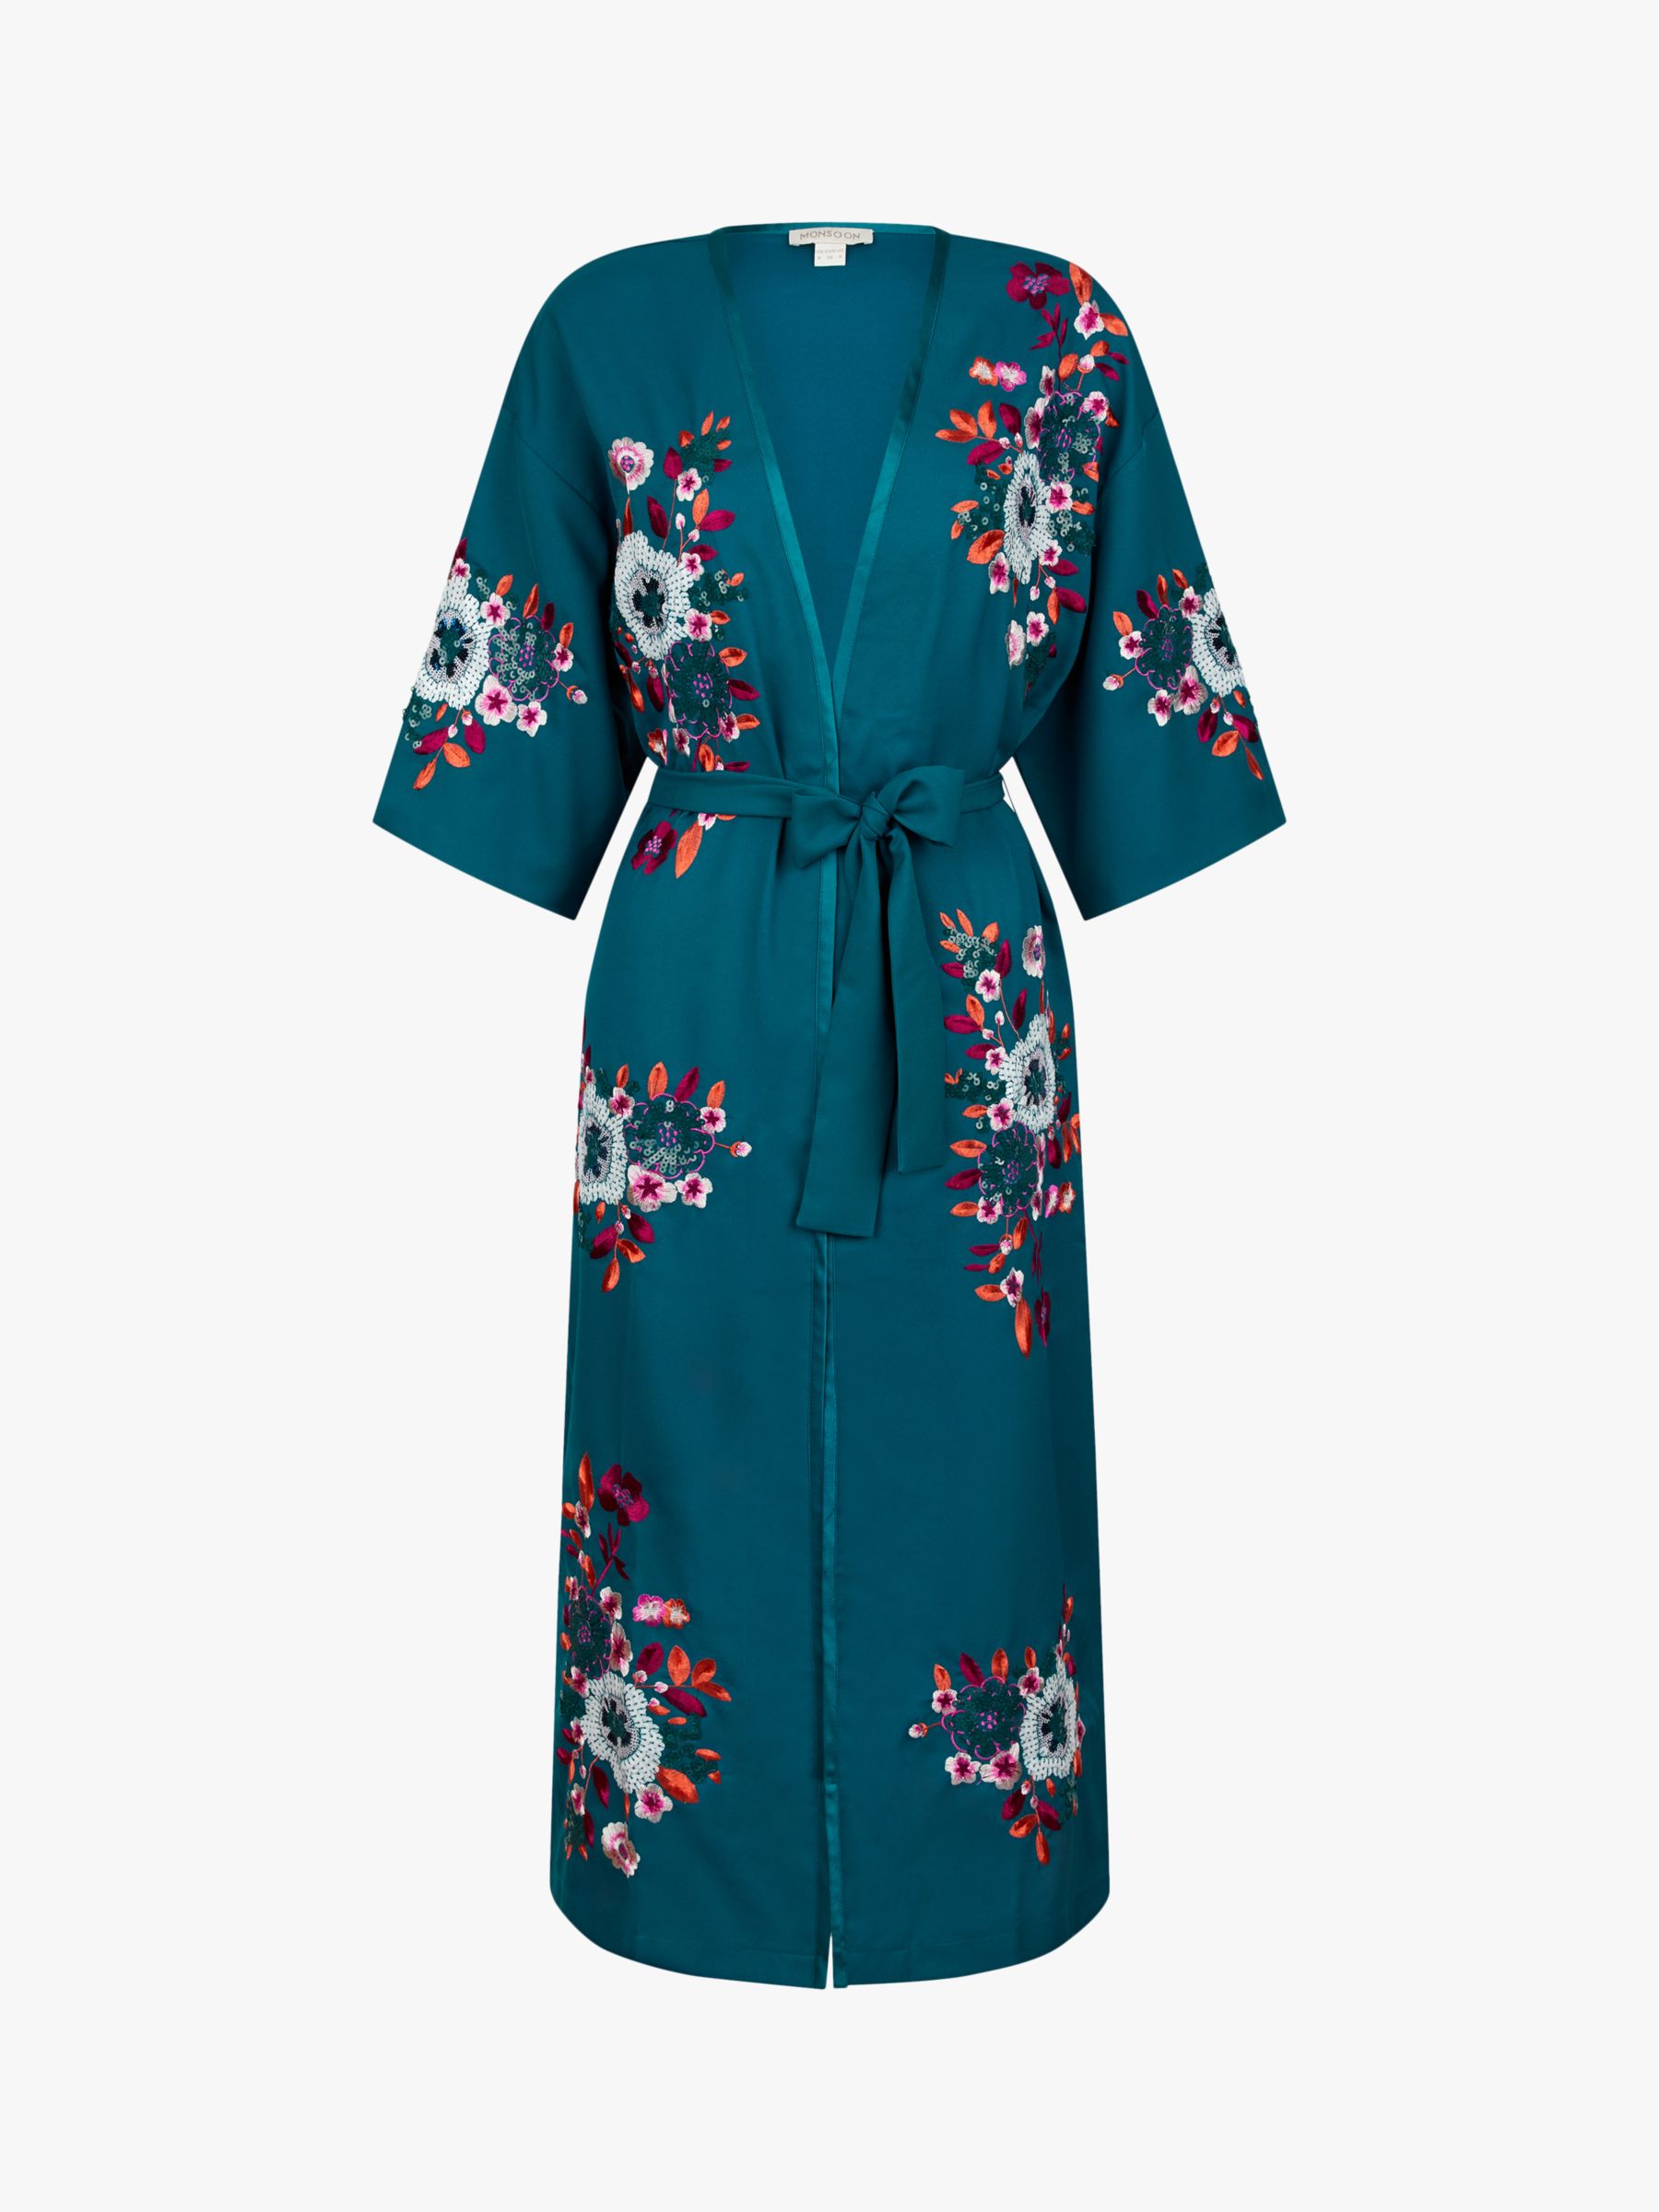 Monsoon Lucia Floral Print Kimono, Teal at John Lewis & Partners